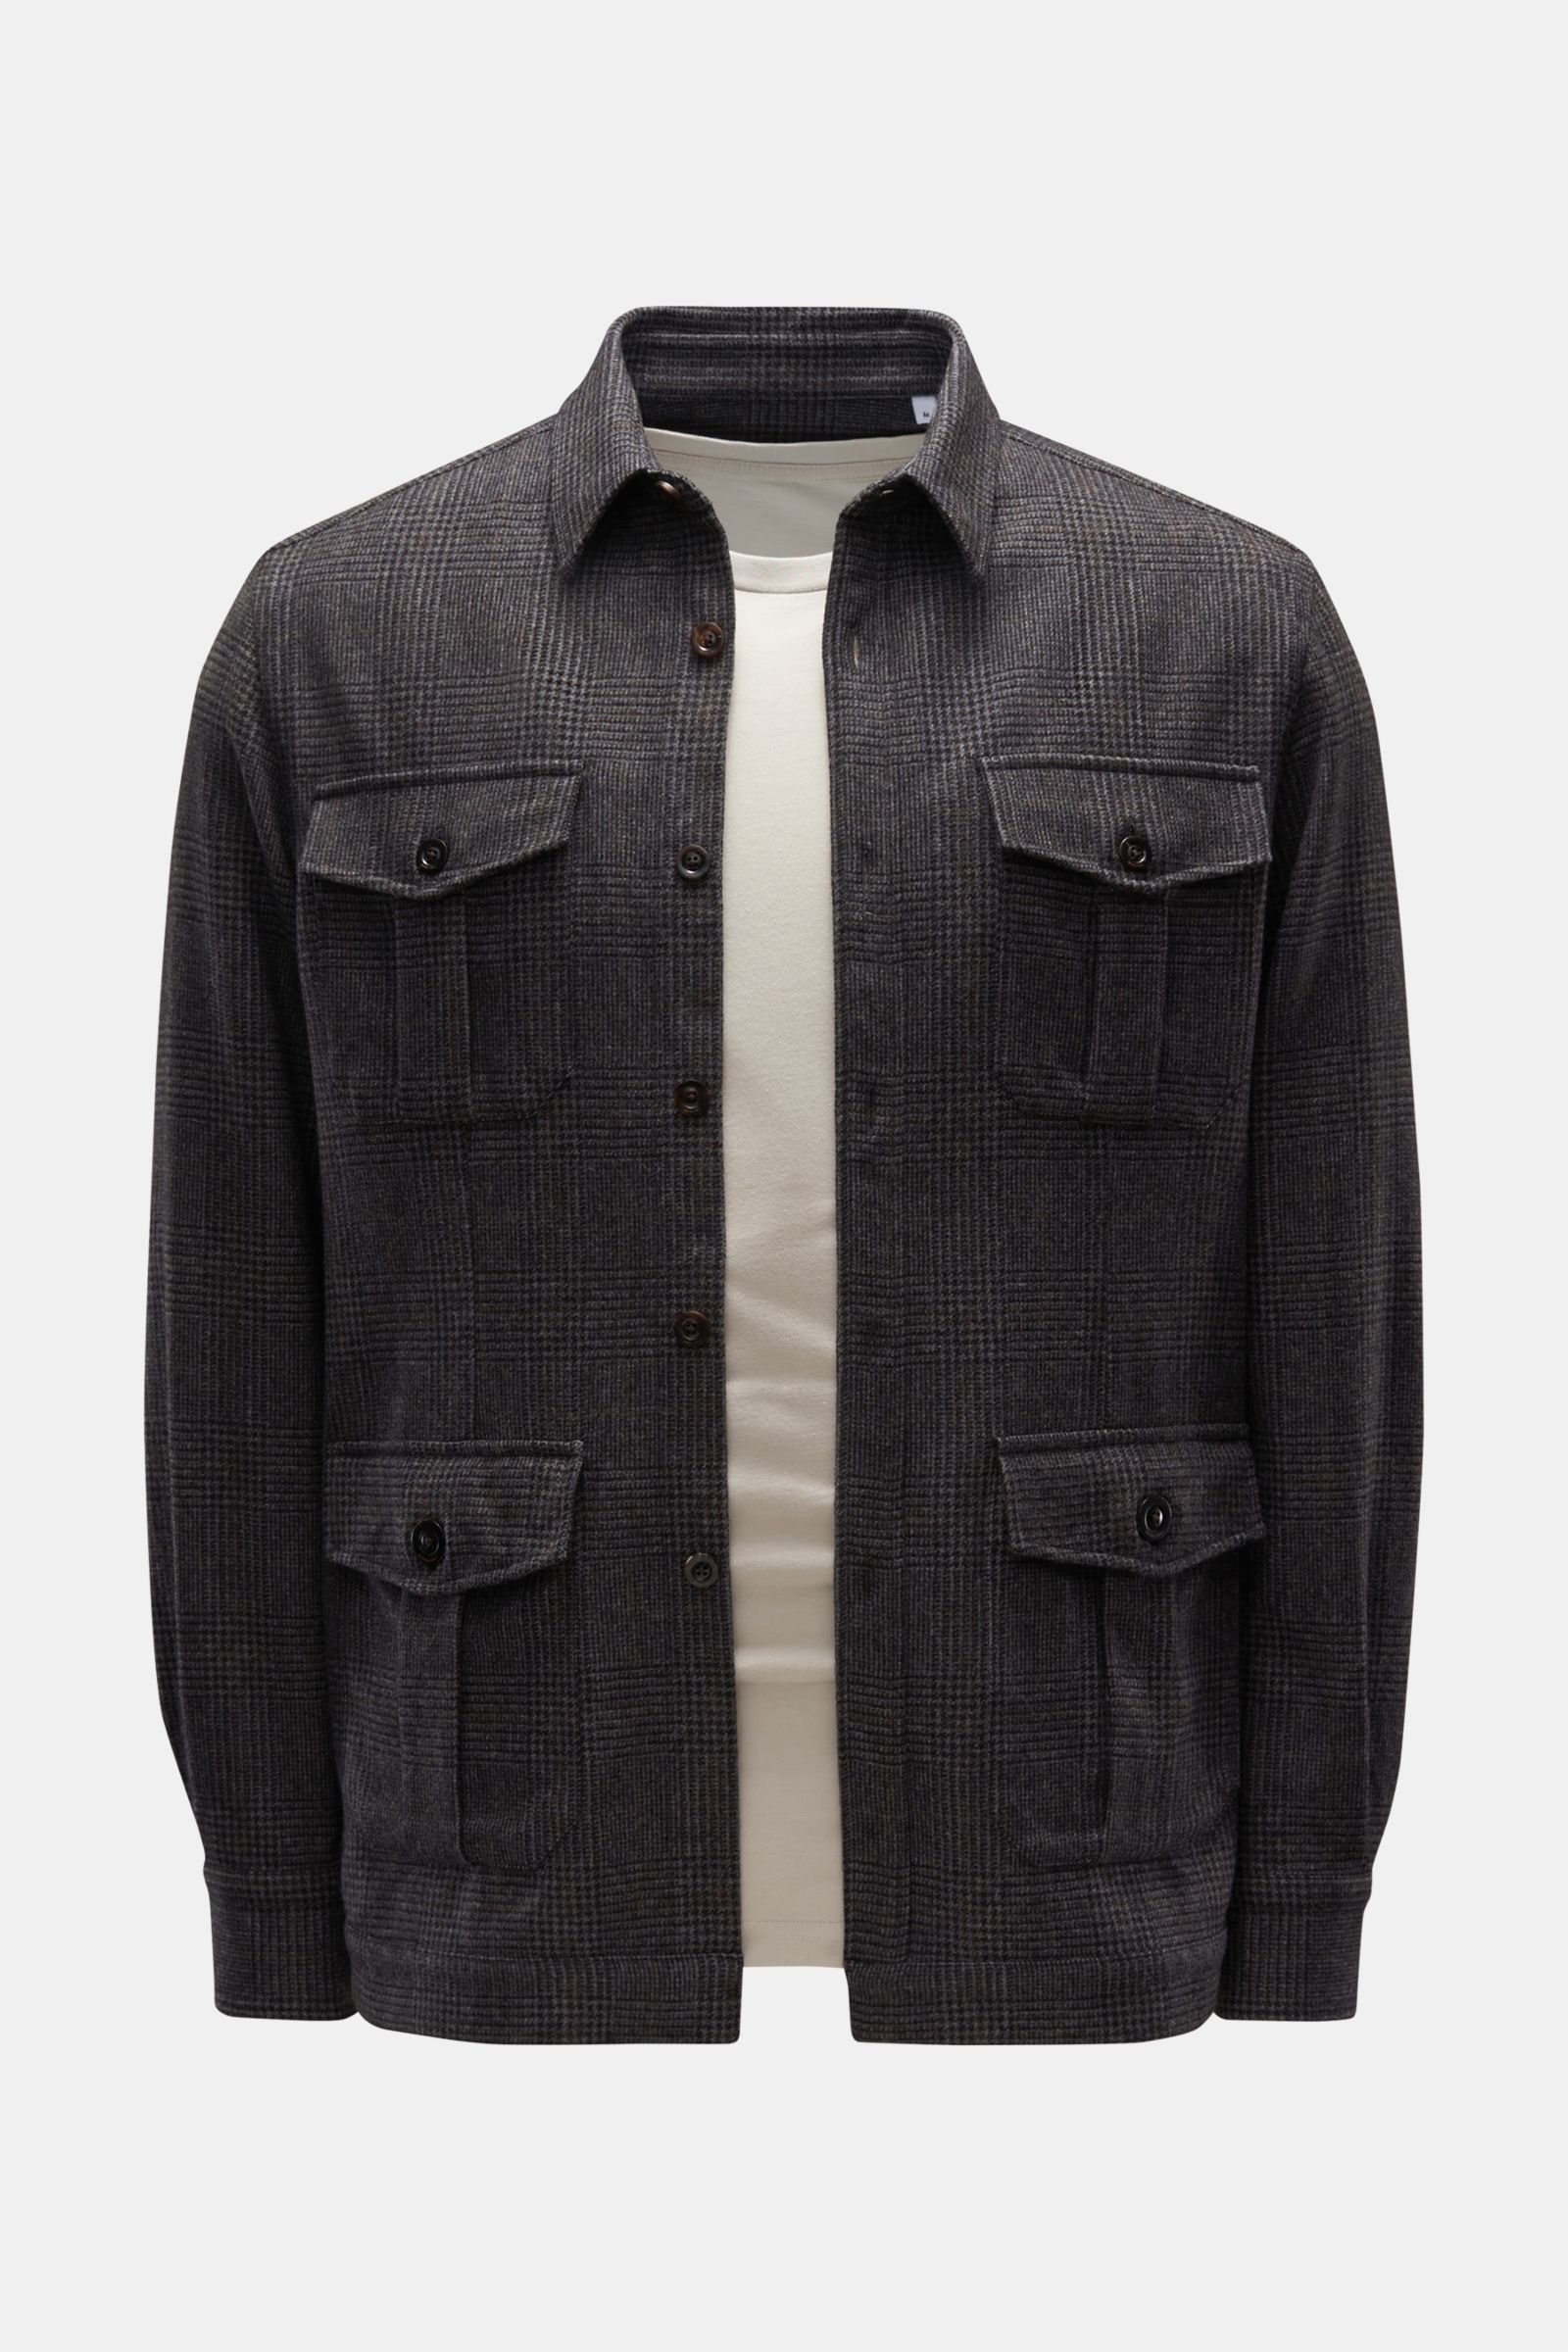 Flannel overshirt grey-brown/dark brown checked